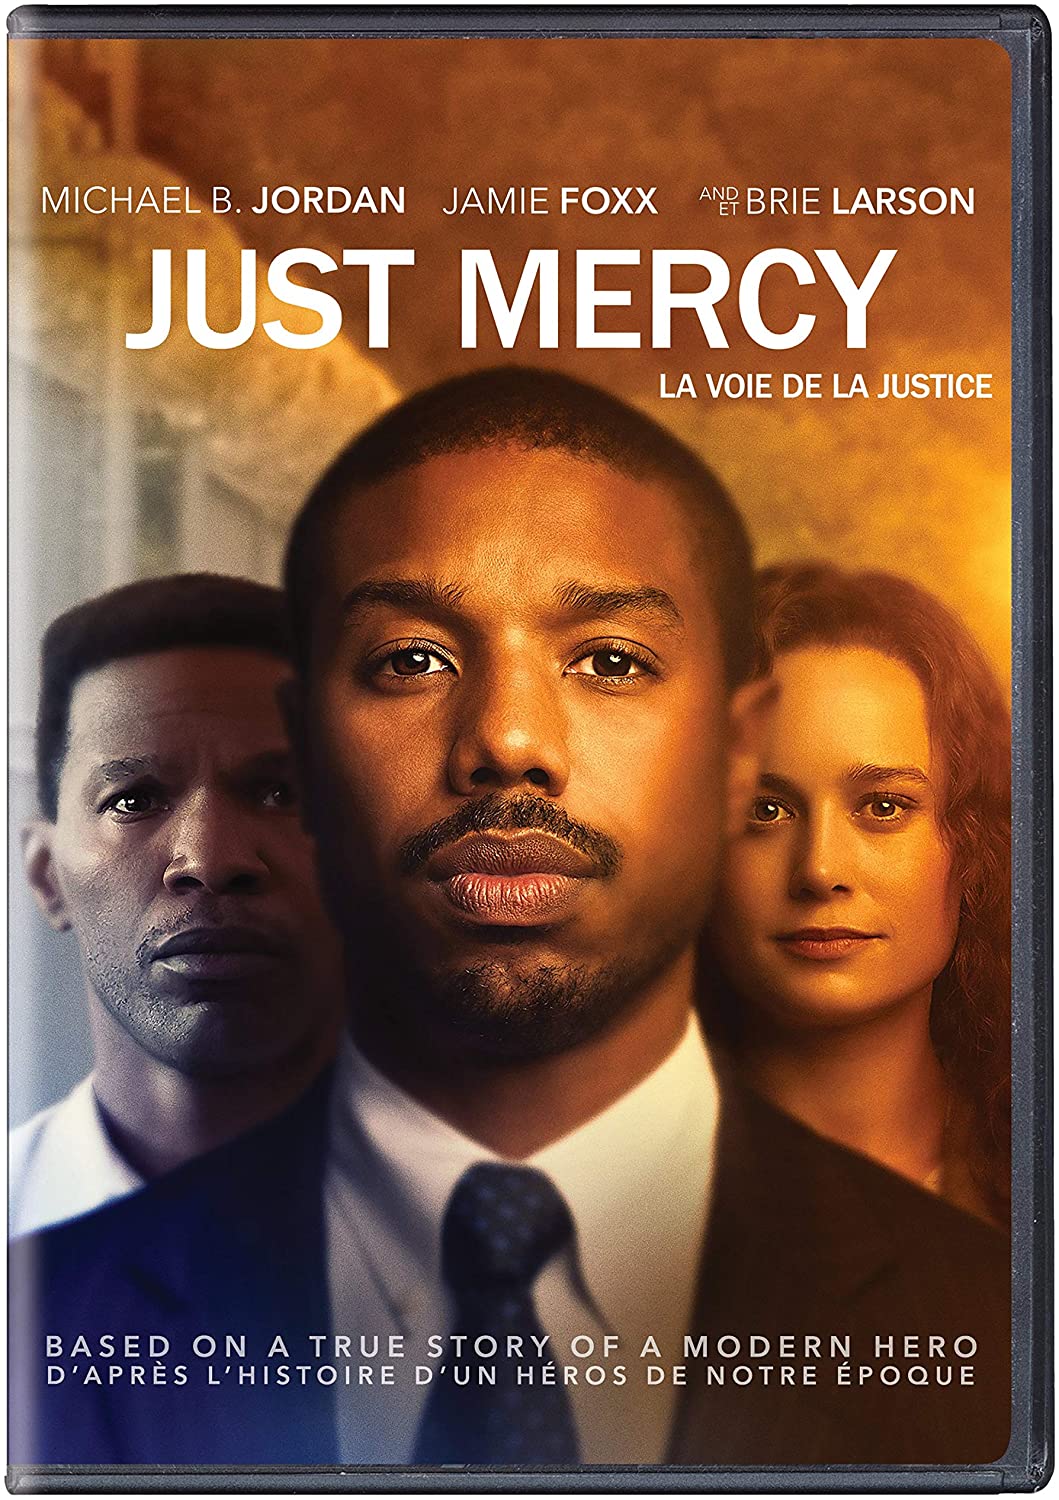 Just mercy [DVD] (2019).  Directed by Destin Daniel Cretton.